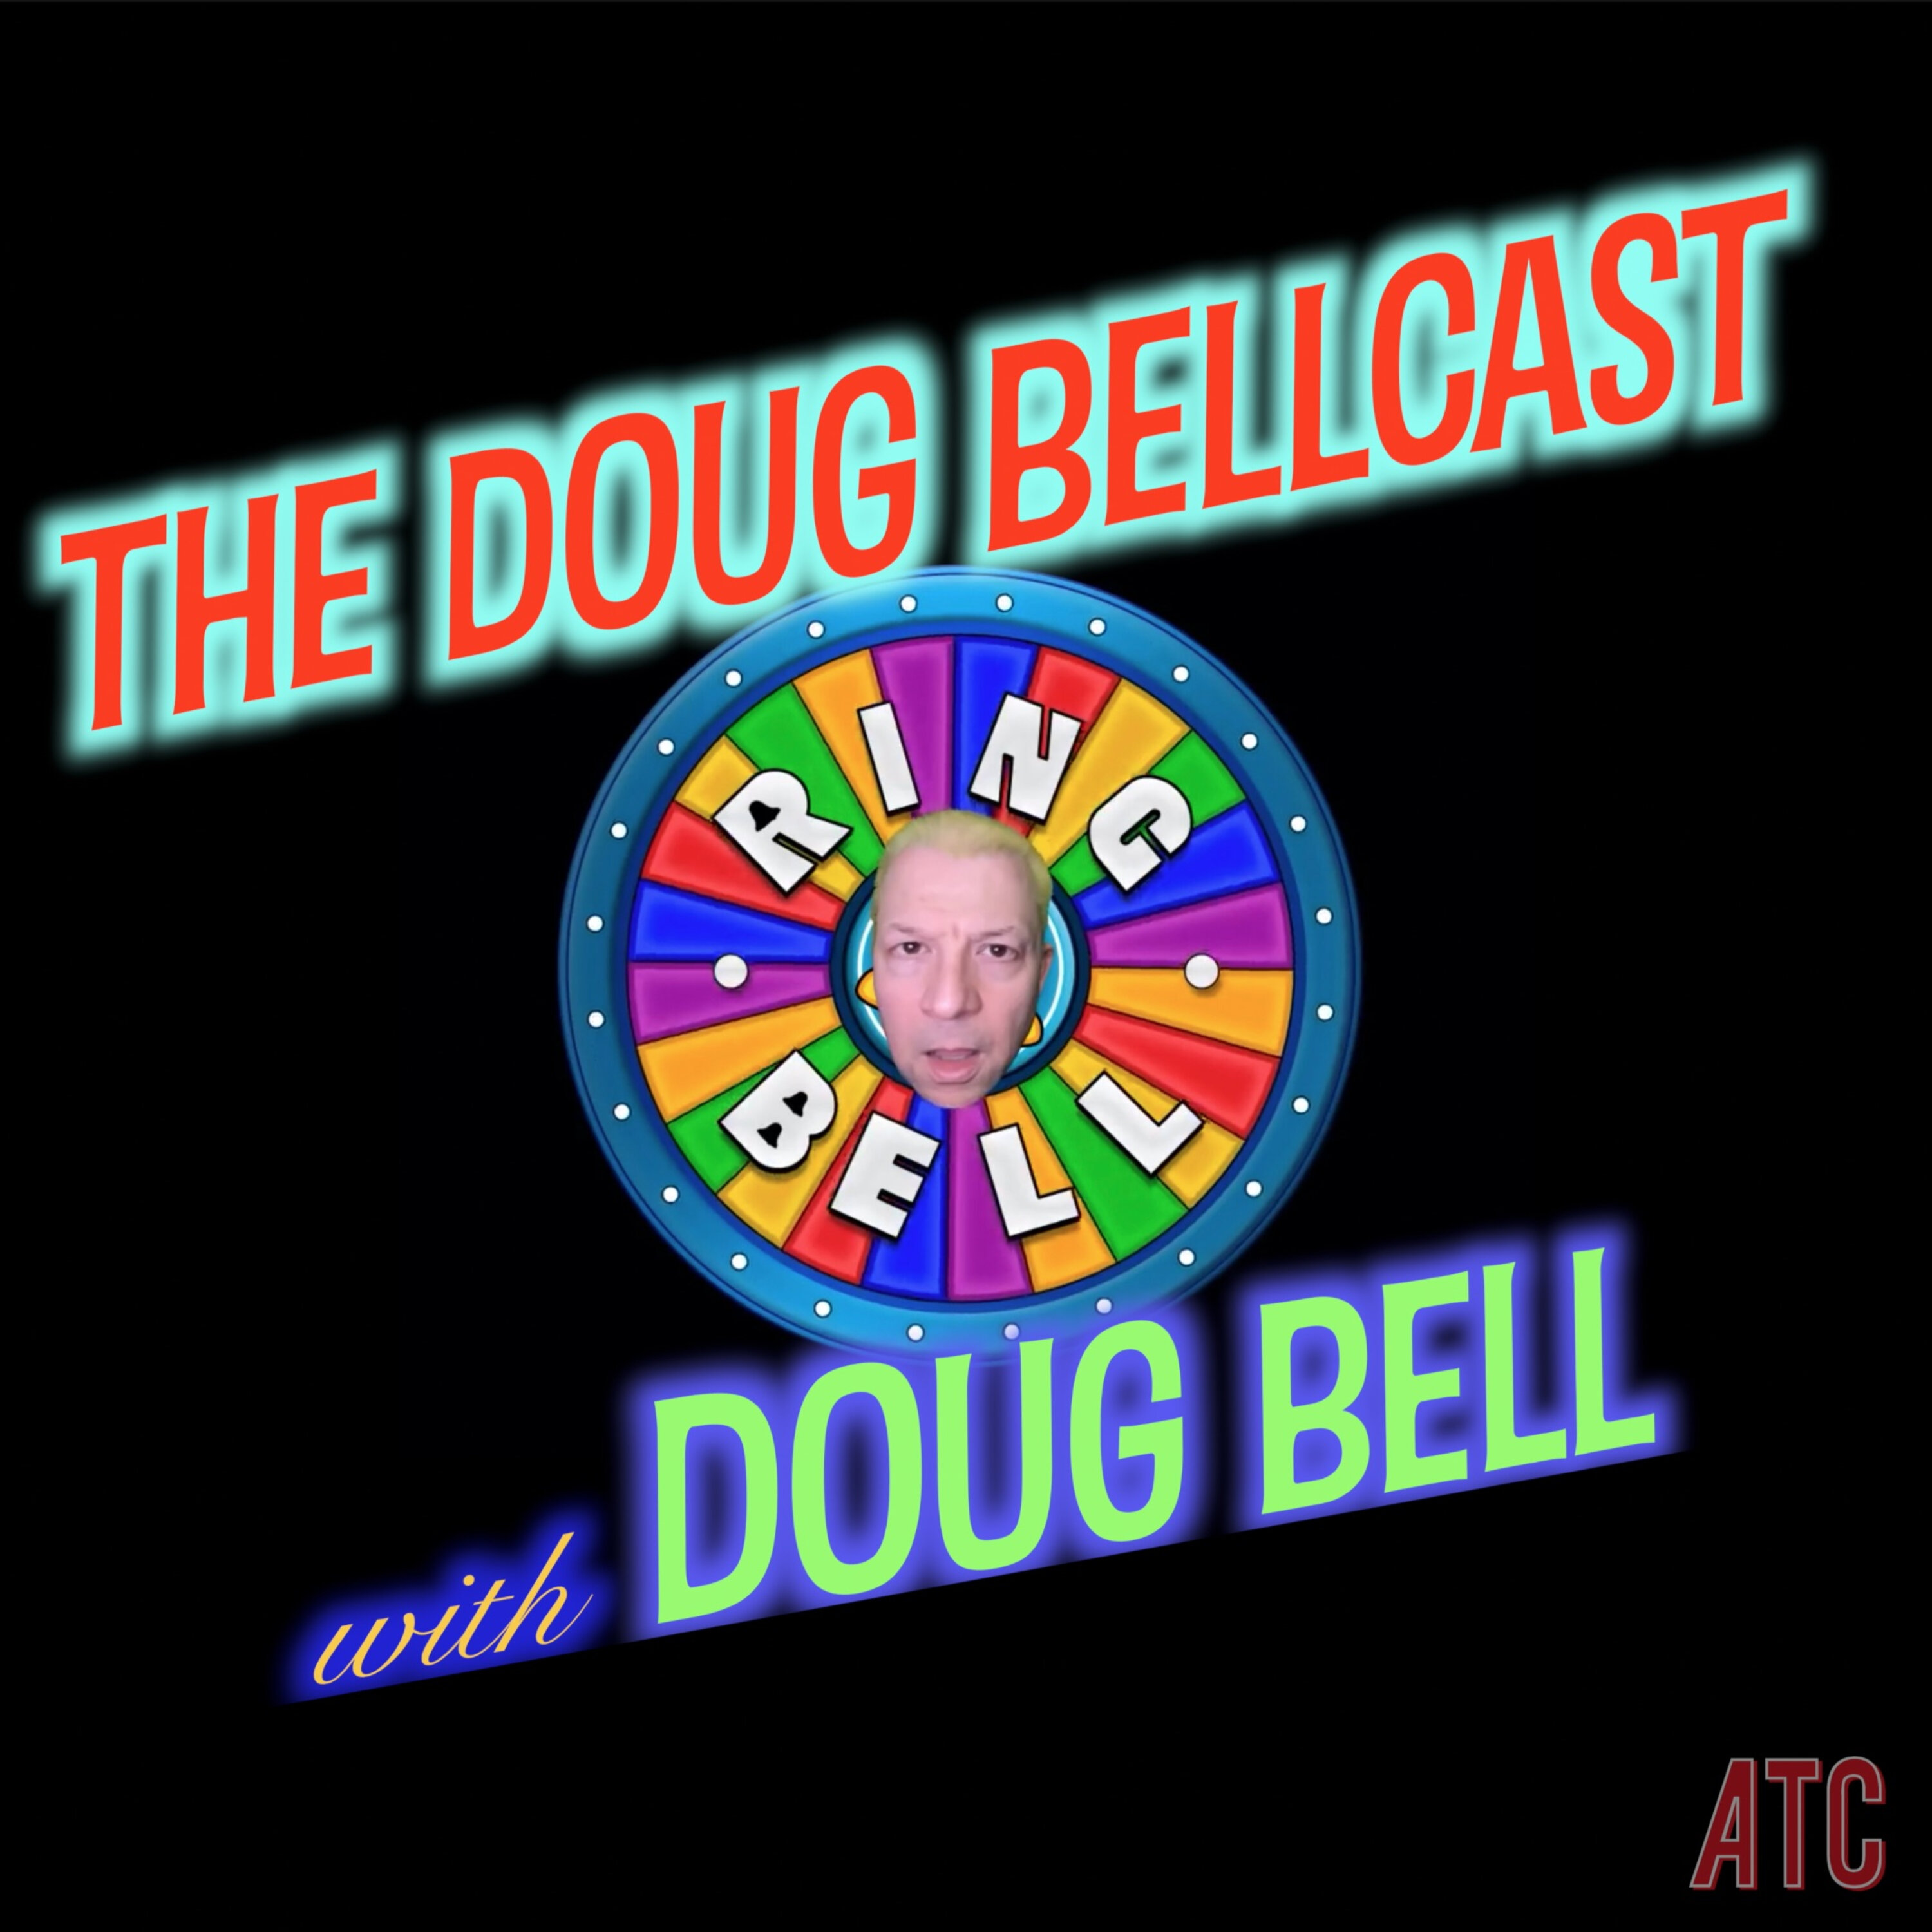 Doug Bellcast 46 - President Trump, Clint Eastwood